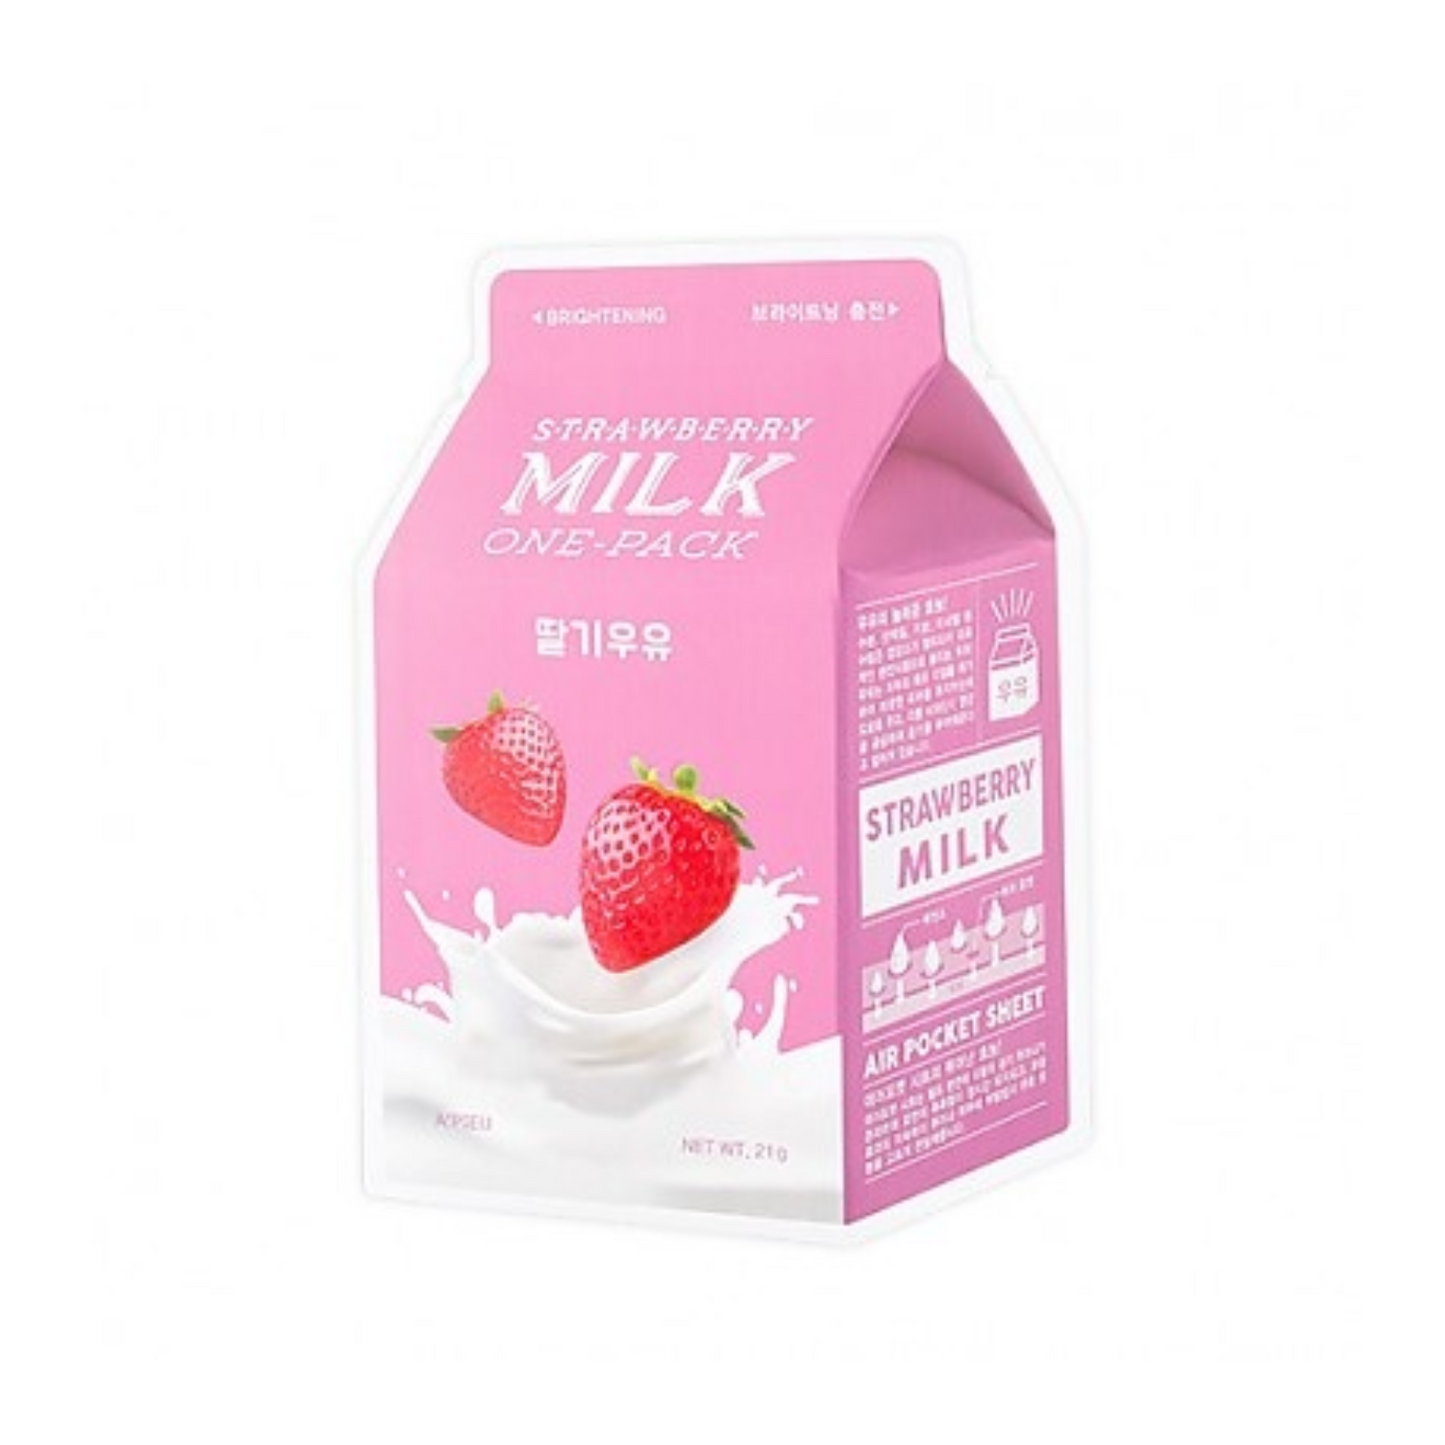 APIEU Milk One Pack #Strawberry Milk